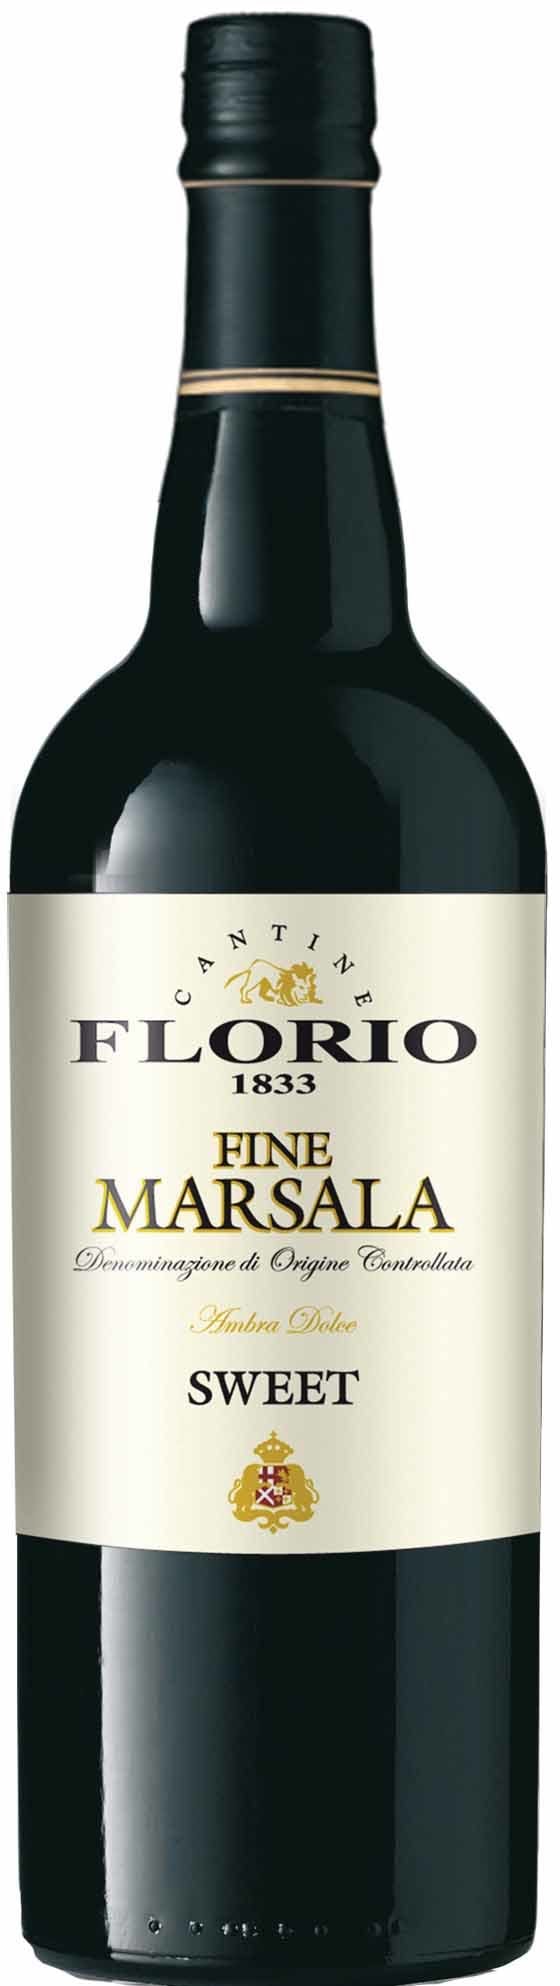 Florio Sweet Marsala 18%